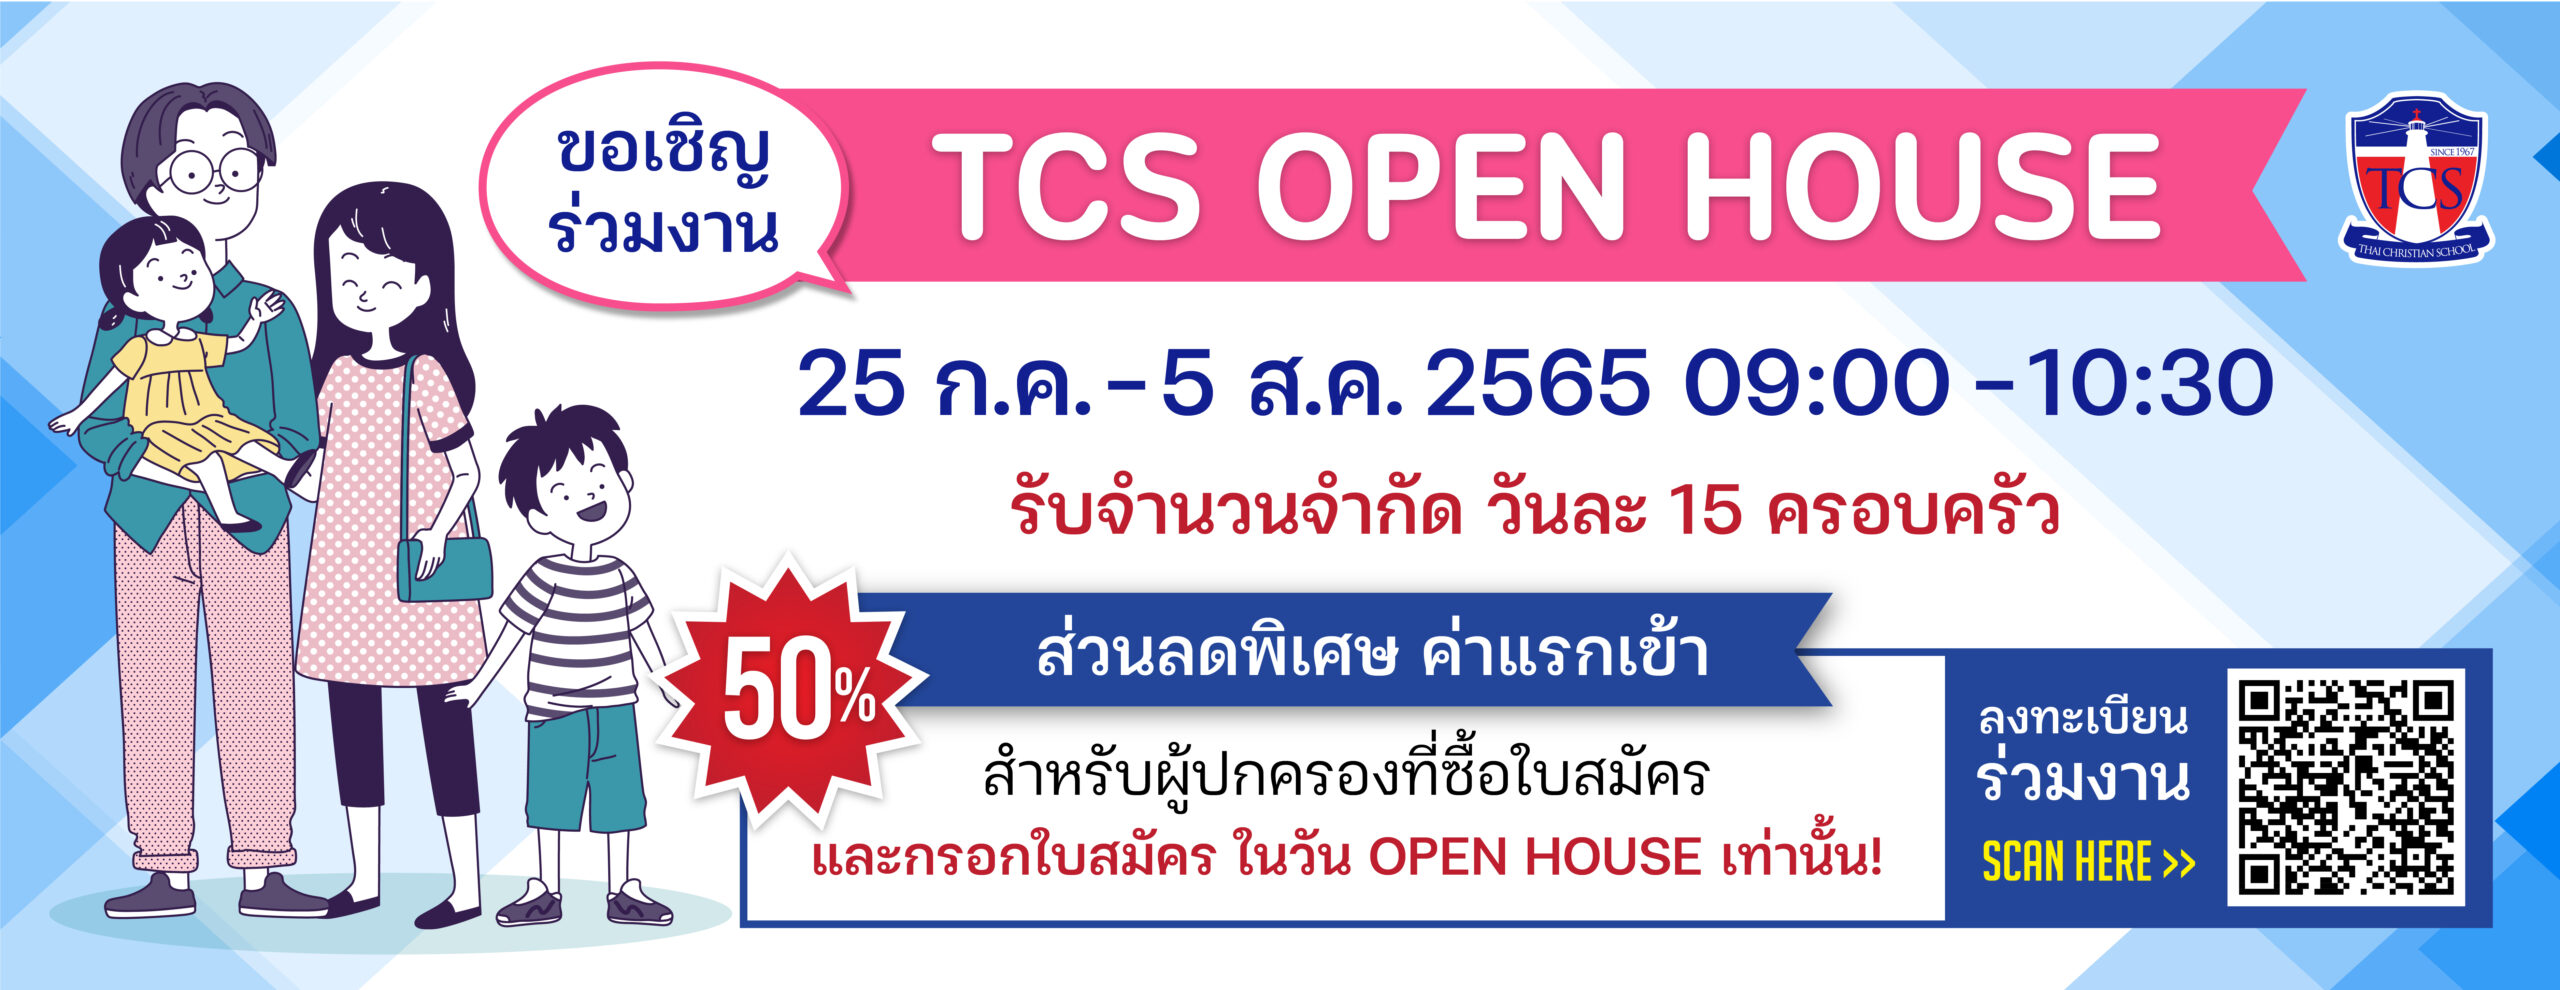 TCS Open House